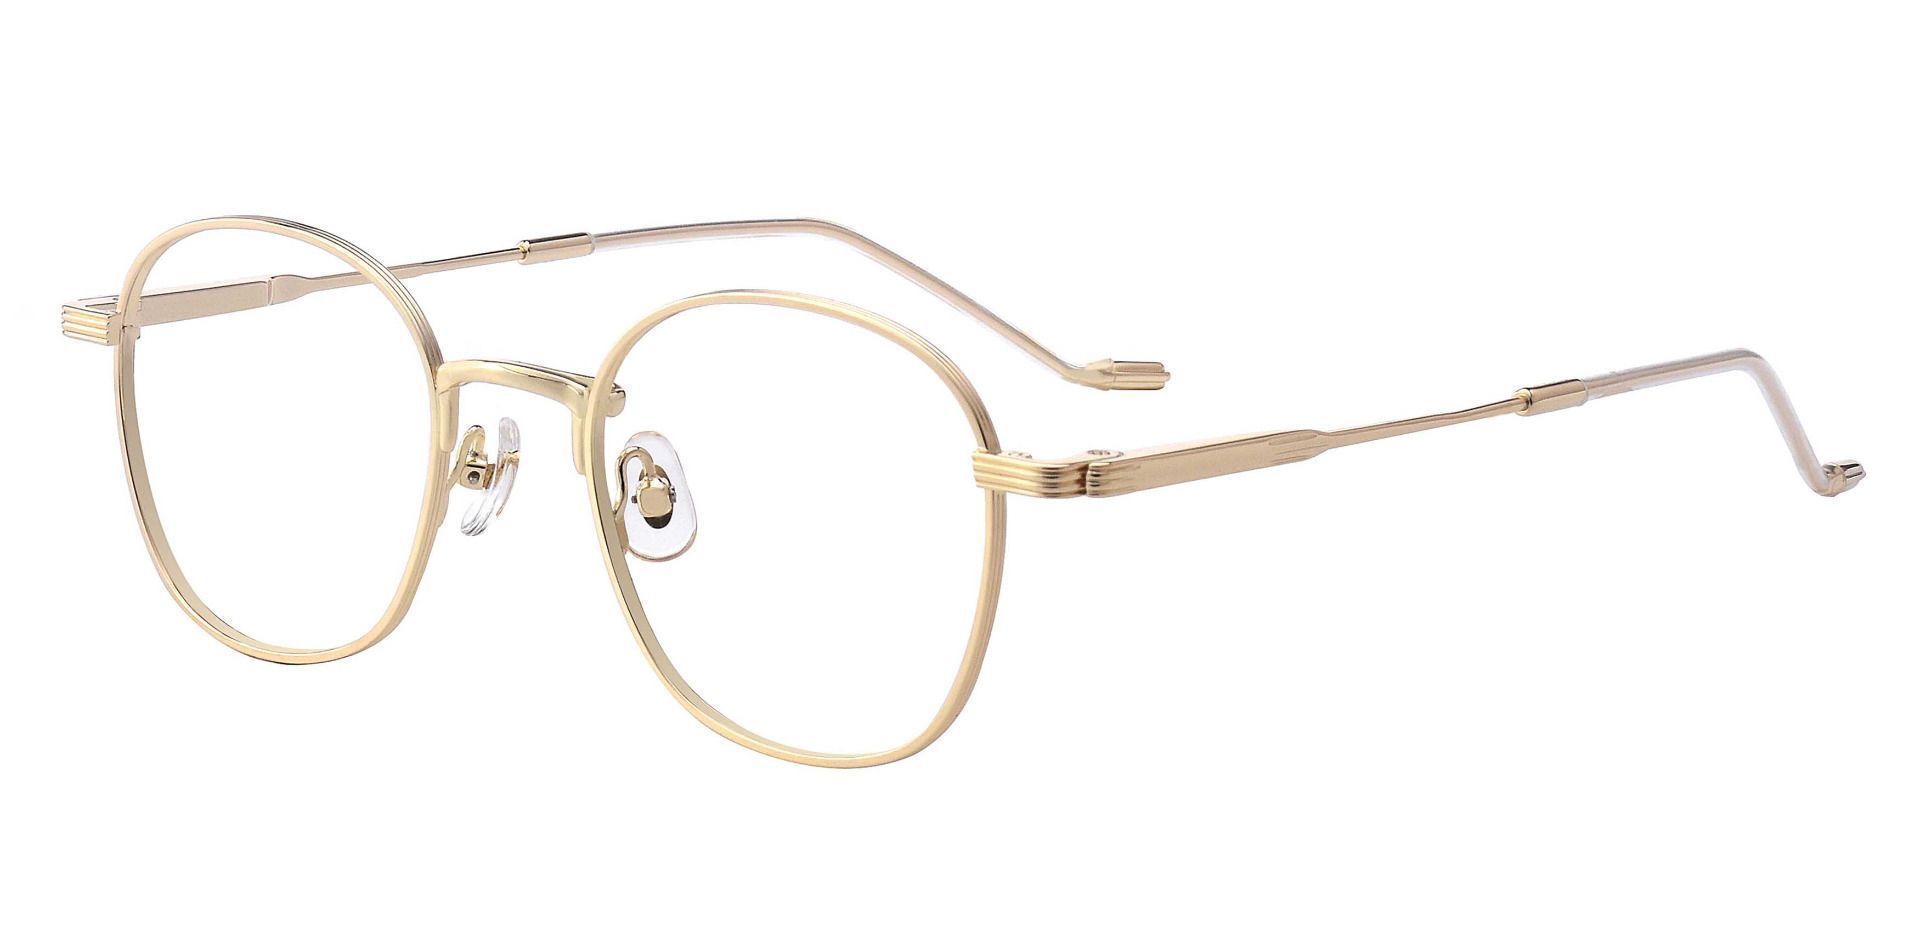 Watkins Oval Prescription Glasses - Gold